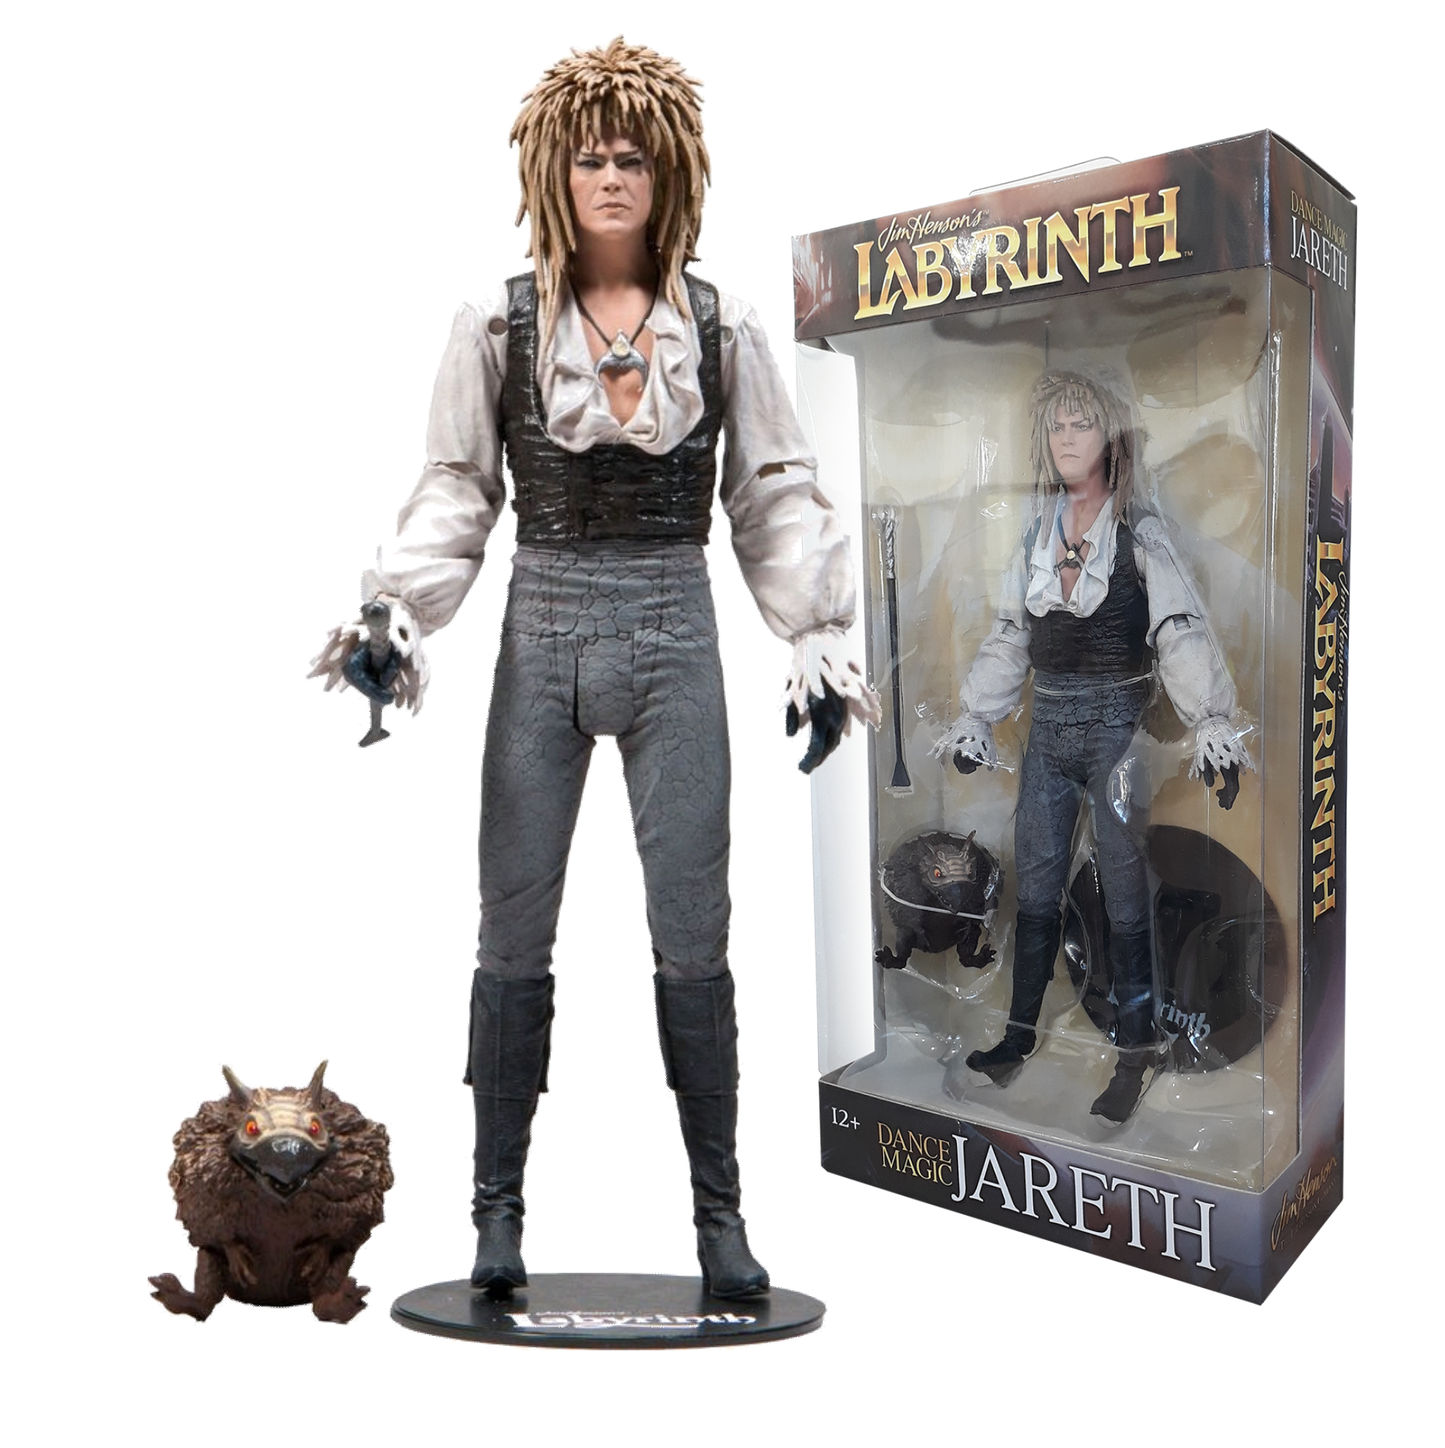 koolaz-ltd - Labyrinth - Jareth in Magic Dance Outfit 7” Action Figure - McFarlane - Figure